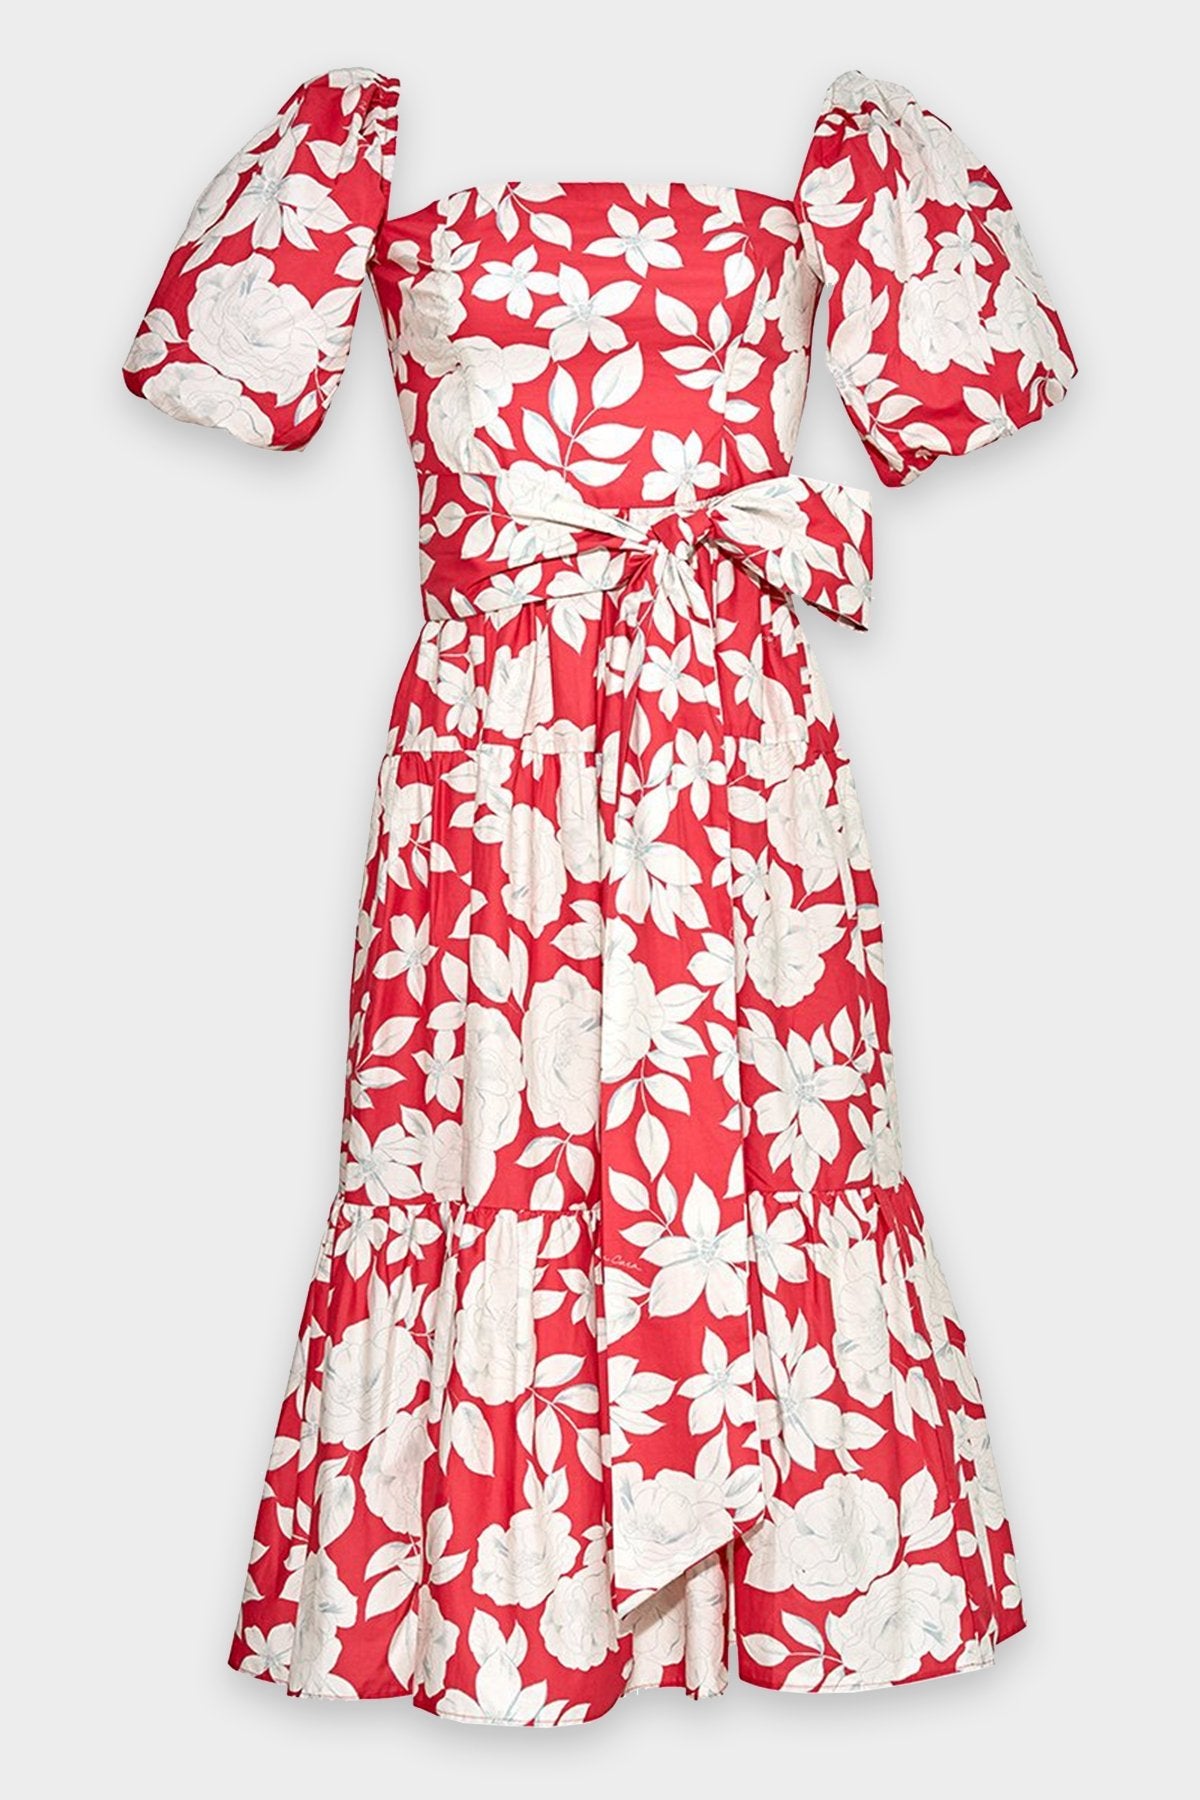 Sydney Dress in Graphic Floral Raspberry - shop-olivia.com